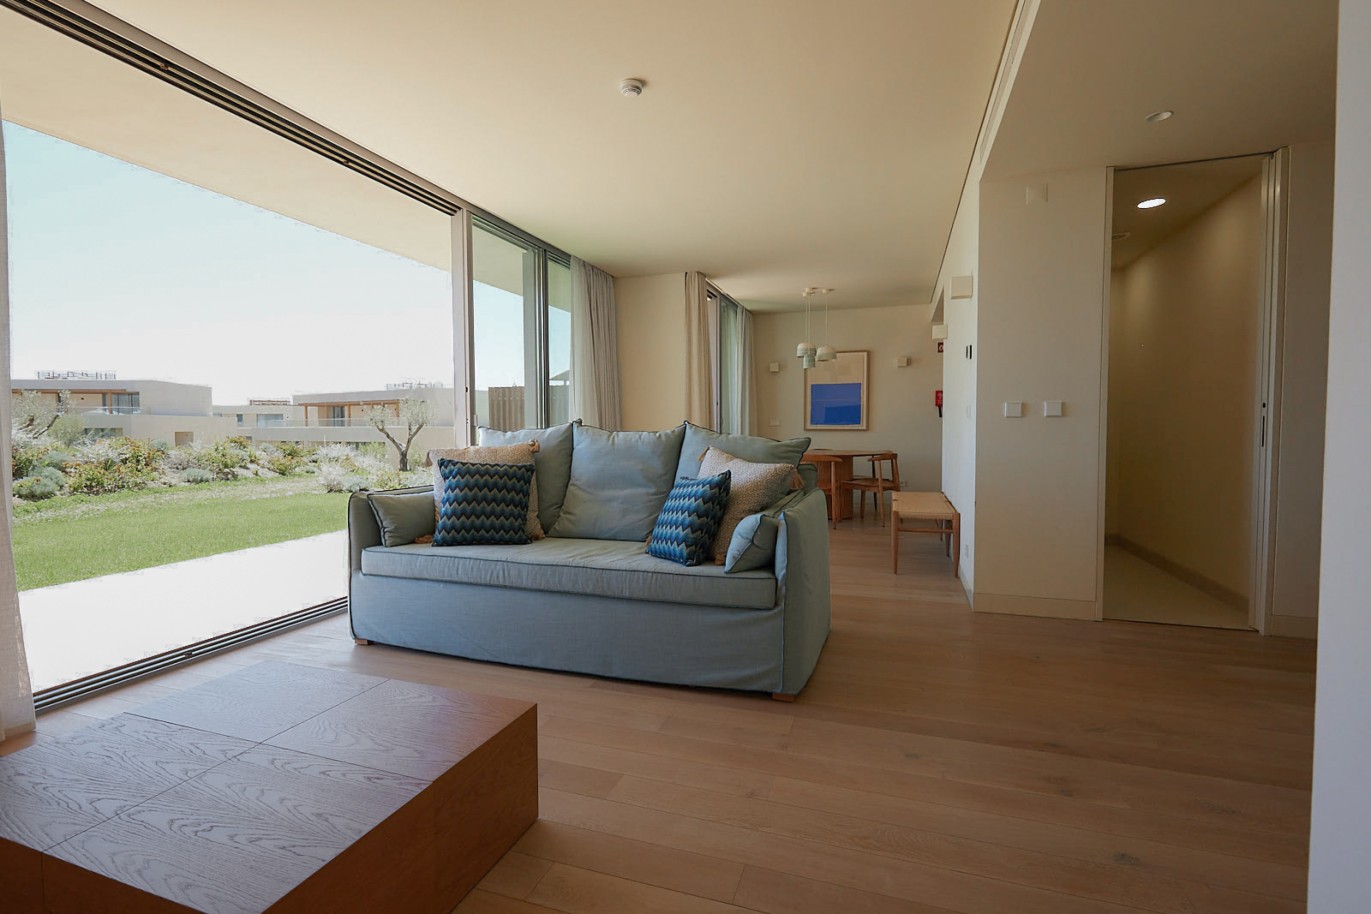 2 bedroom apartment in resort, for sale in Porches, Algarve_229245